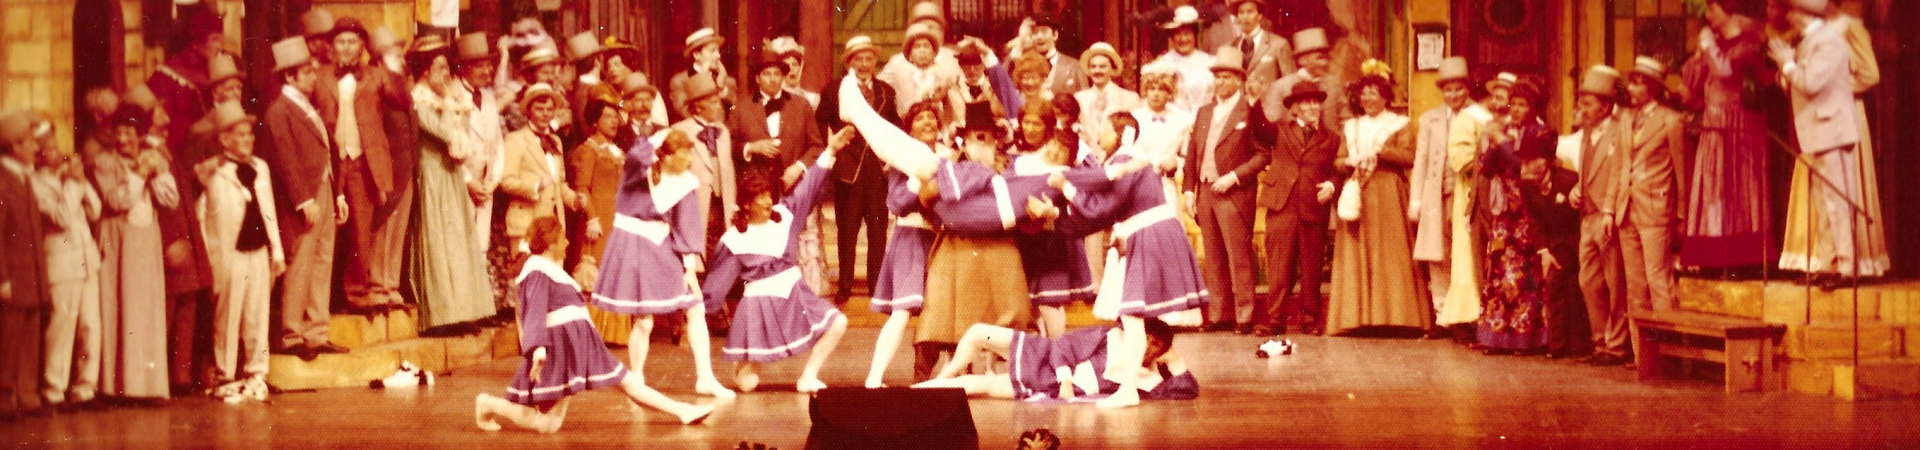 De Globetrotter - Divertissementchen 1978 - Chor und Ballett in großer Szene